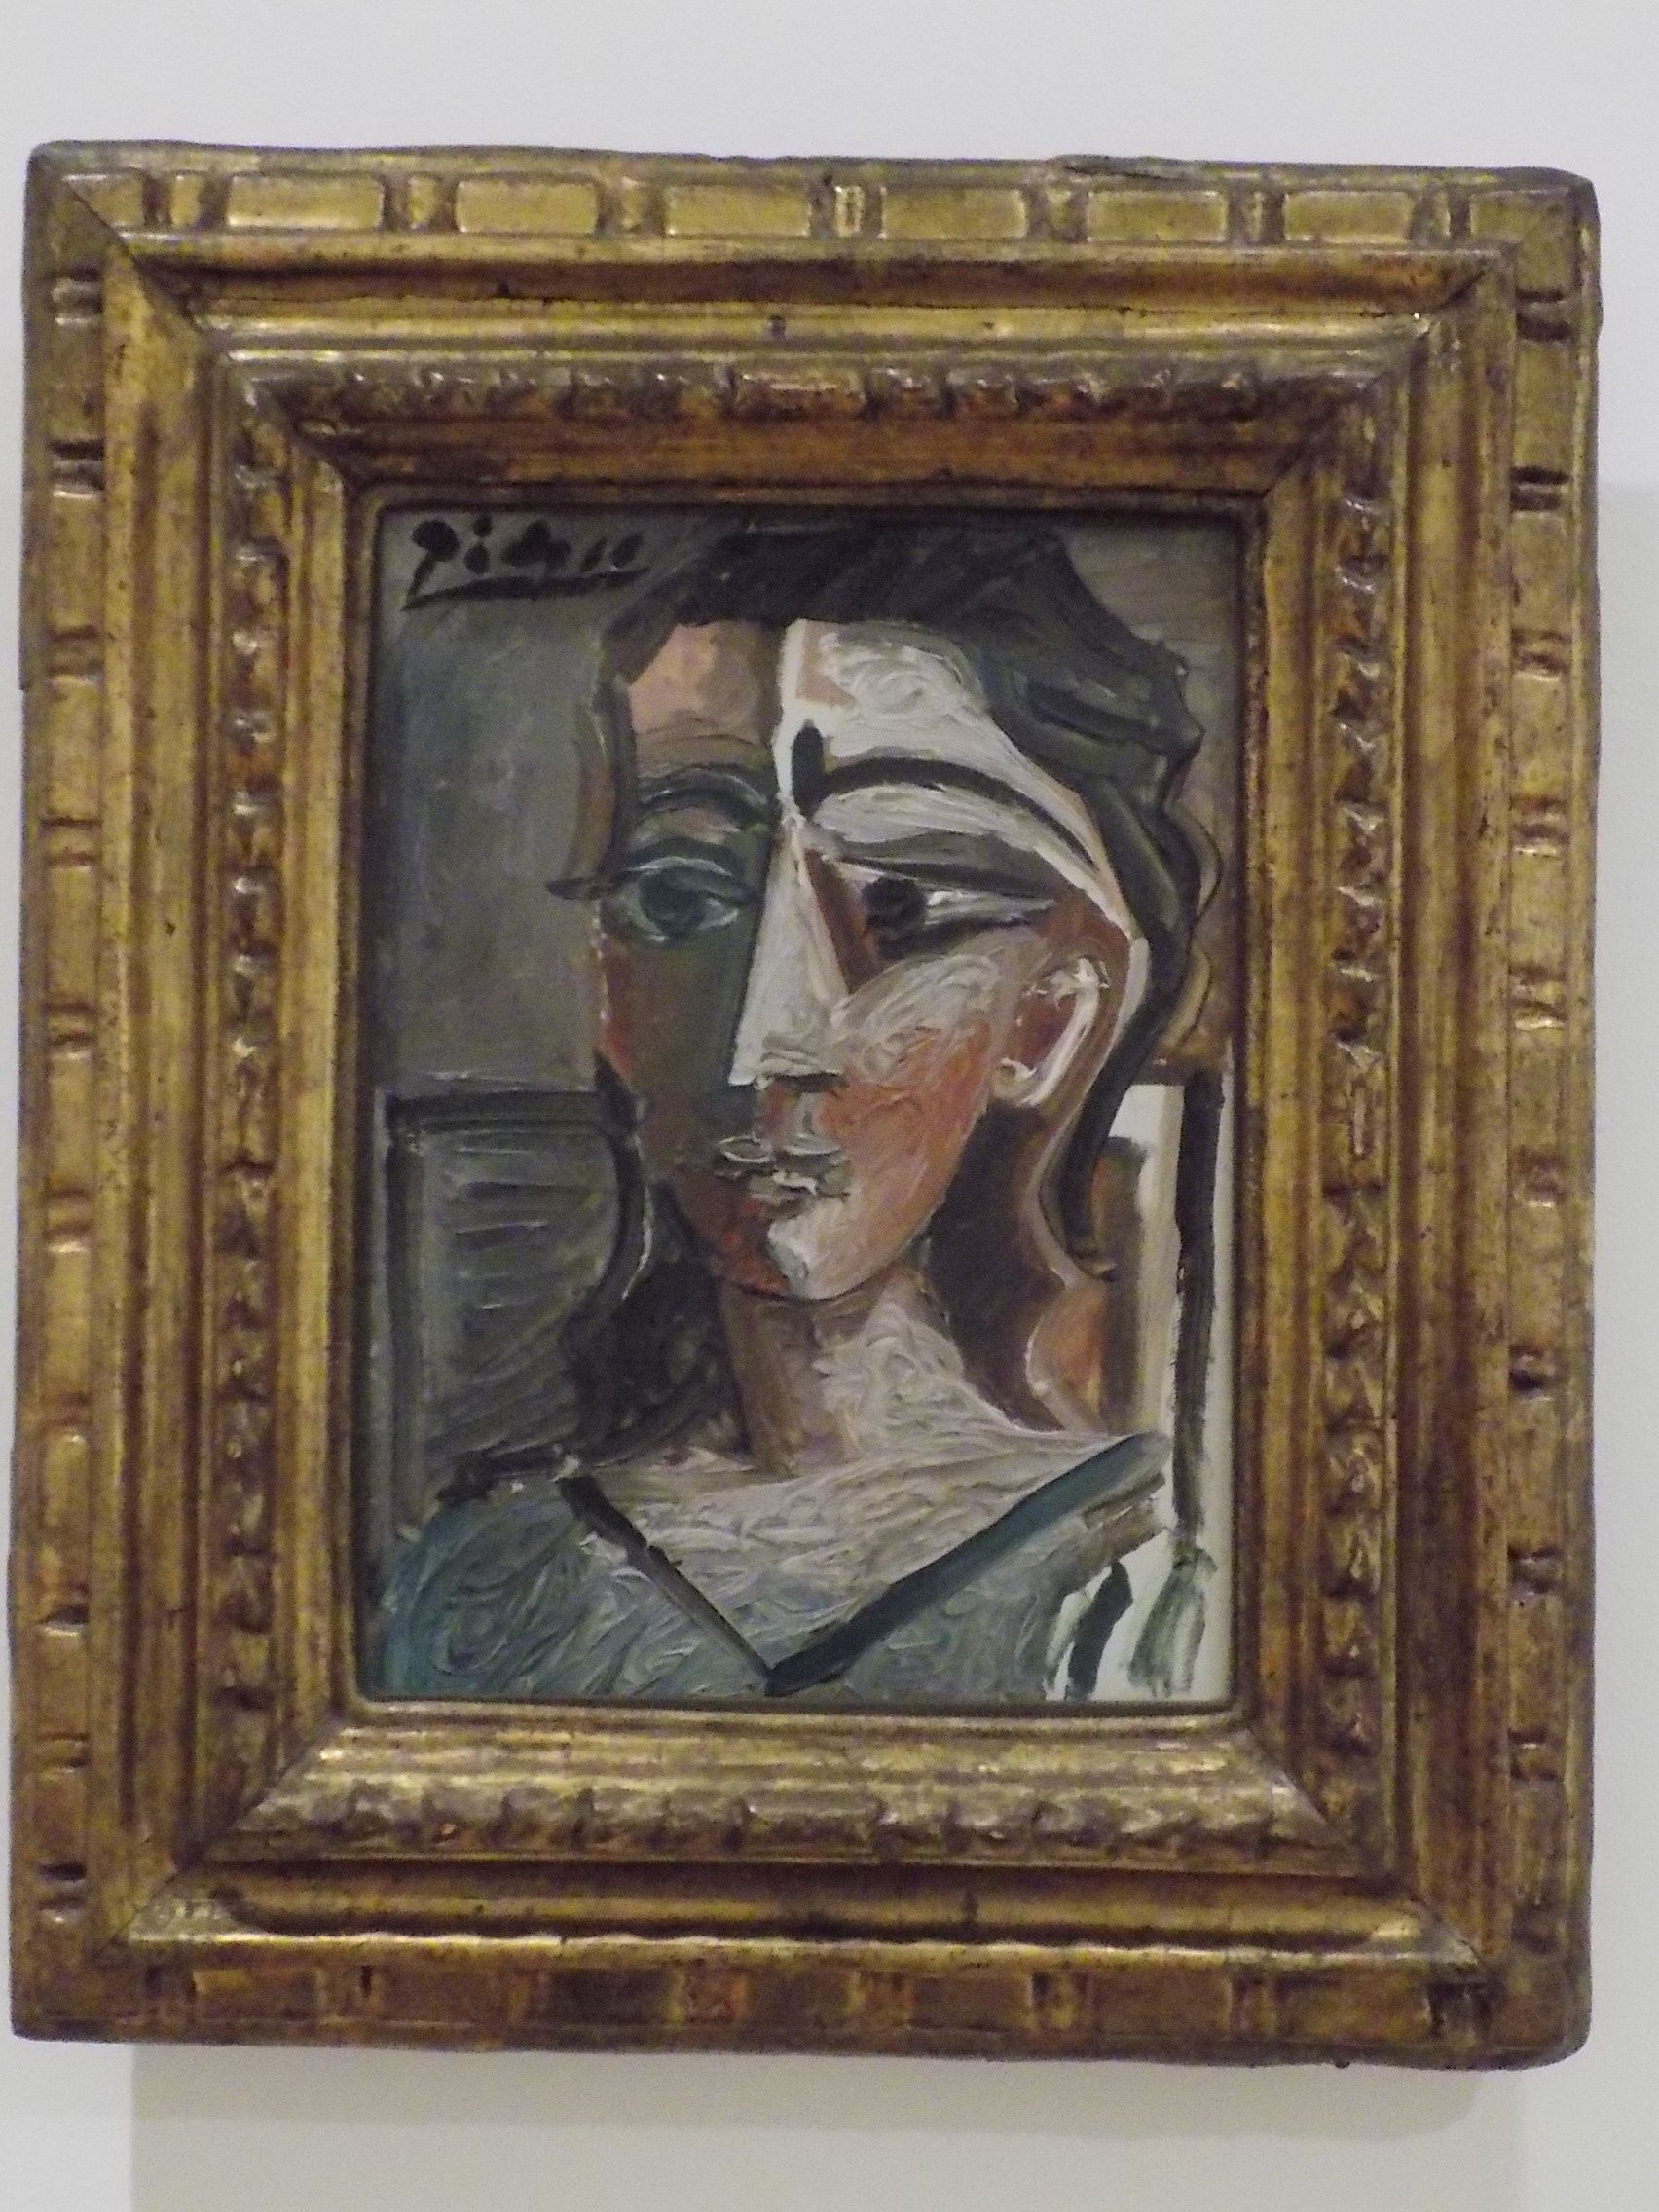 Picasso: "Retrato de Jacqueline"